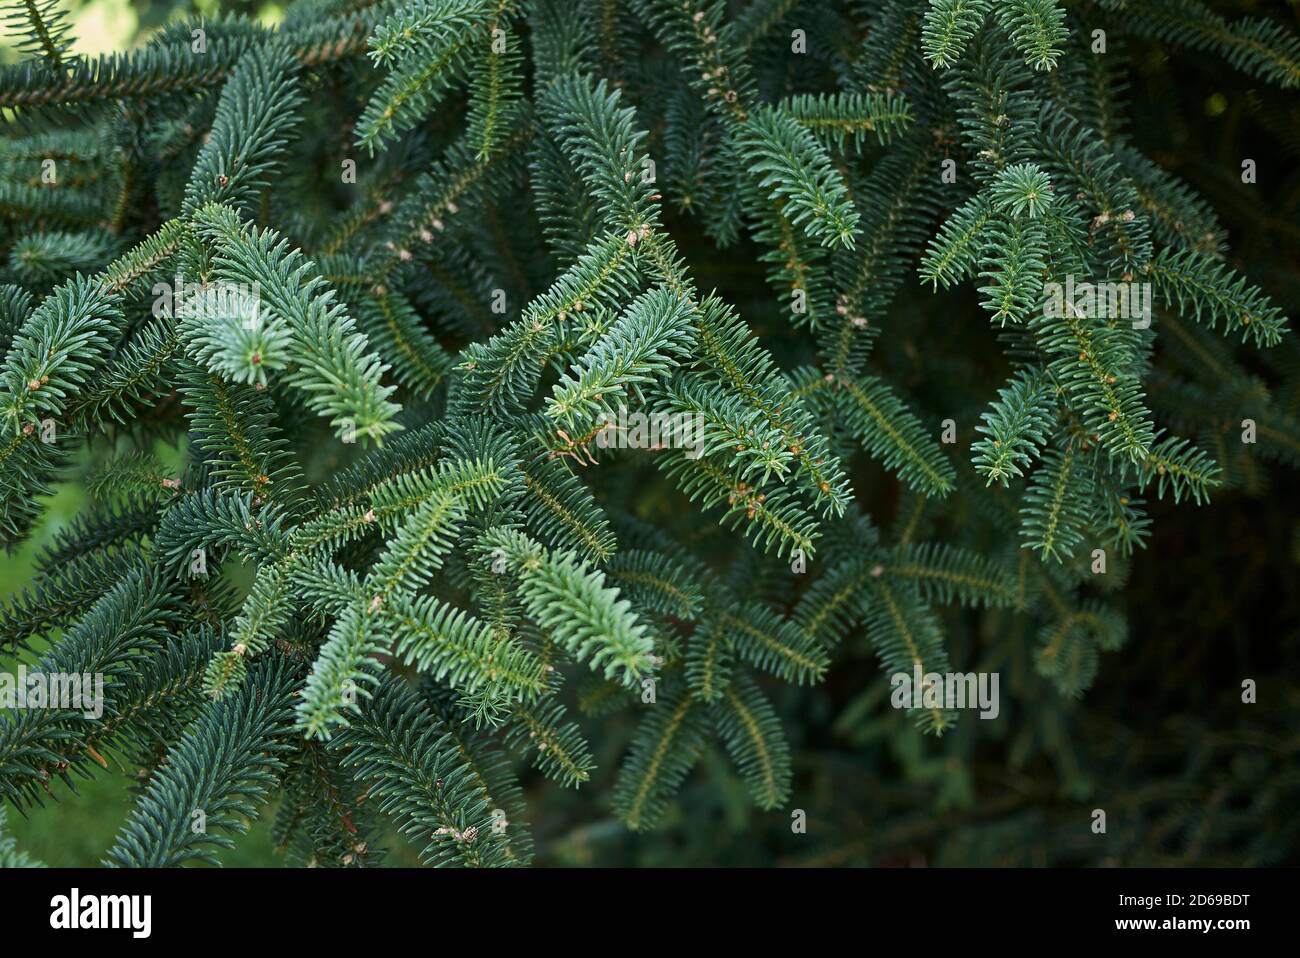 Abies pinsapo textured foliage Stock Photo